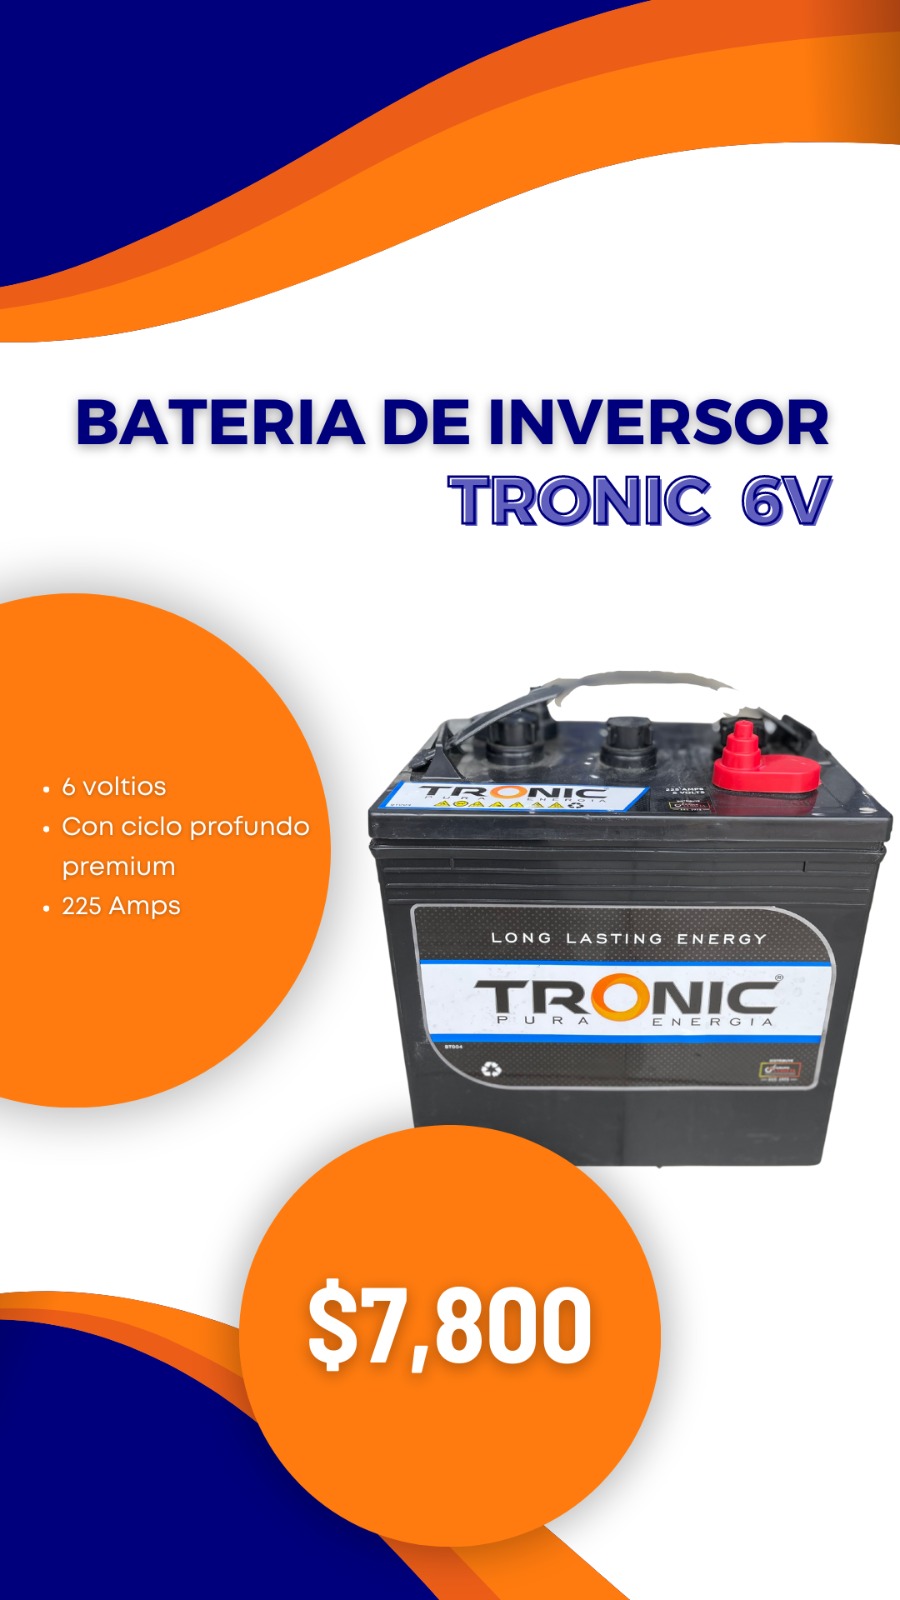 Batería de inversor Tronic 6V Foto 7185608-1.jpg